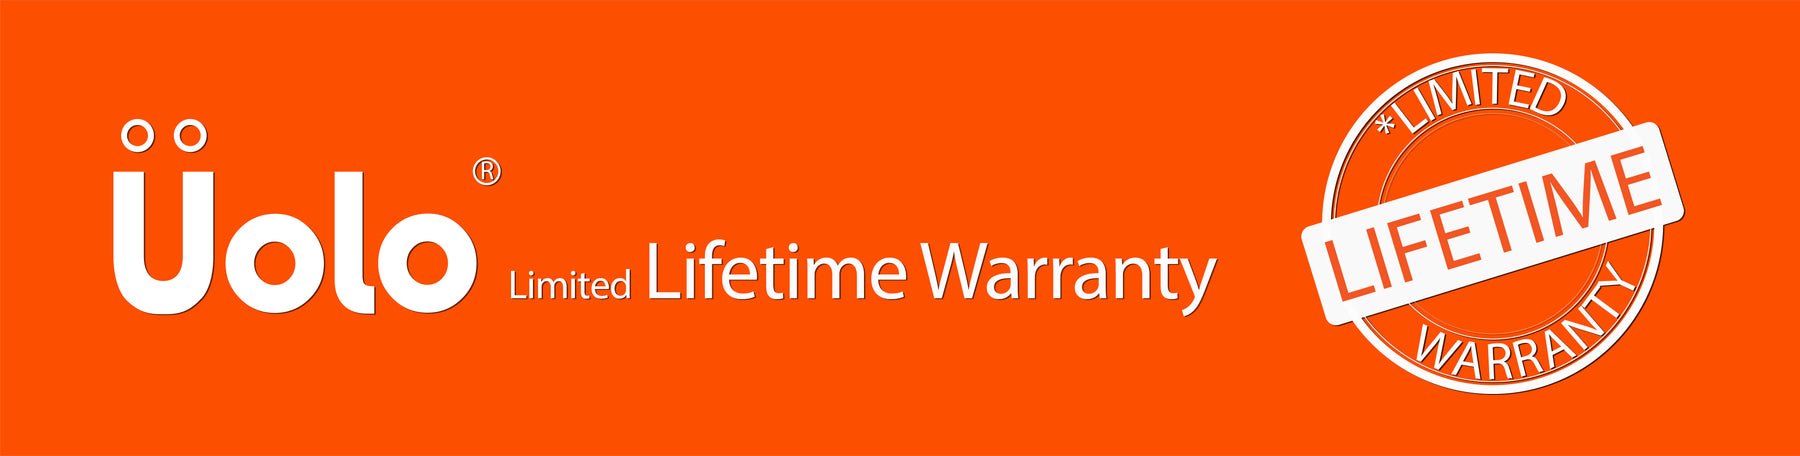 Uolo Limited Lifetime Warranty!